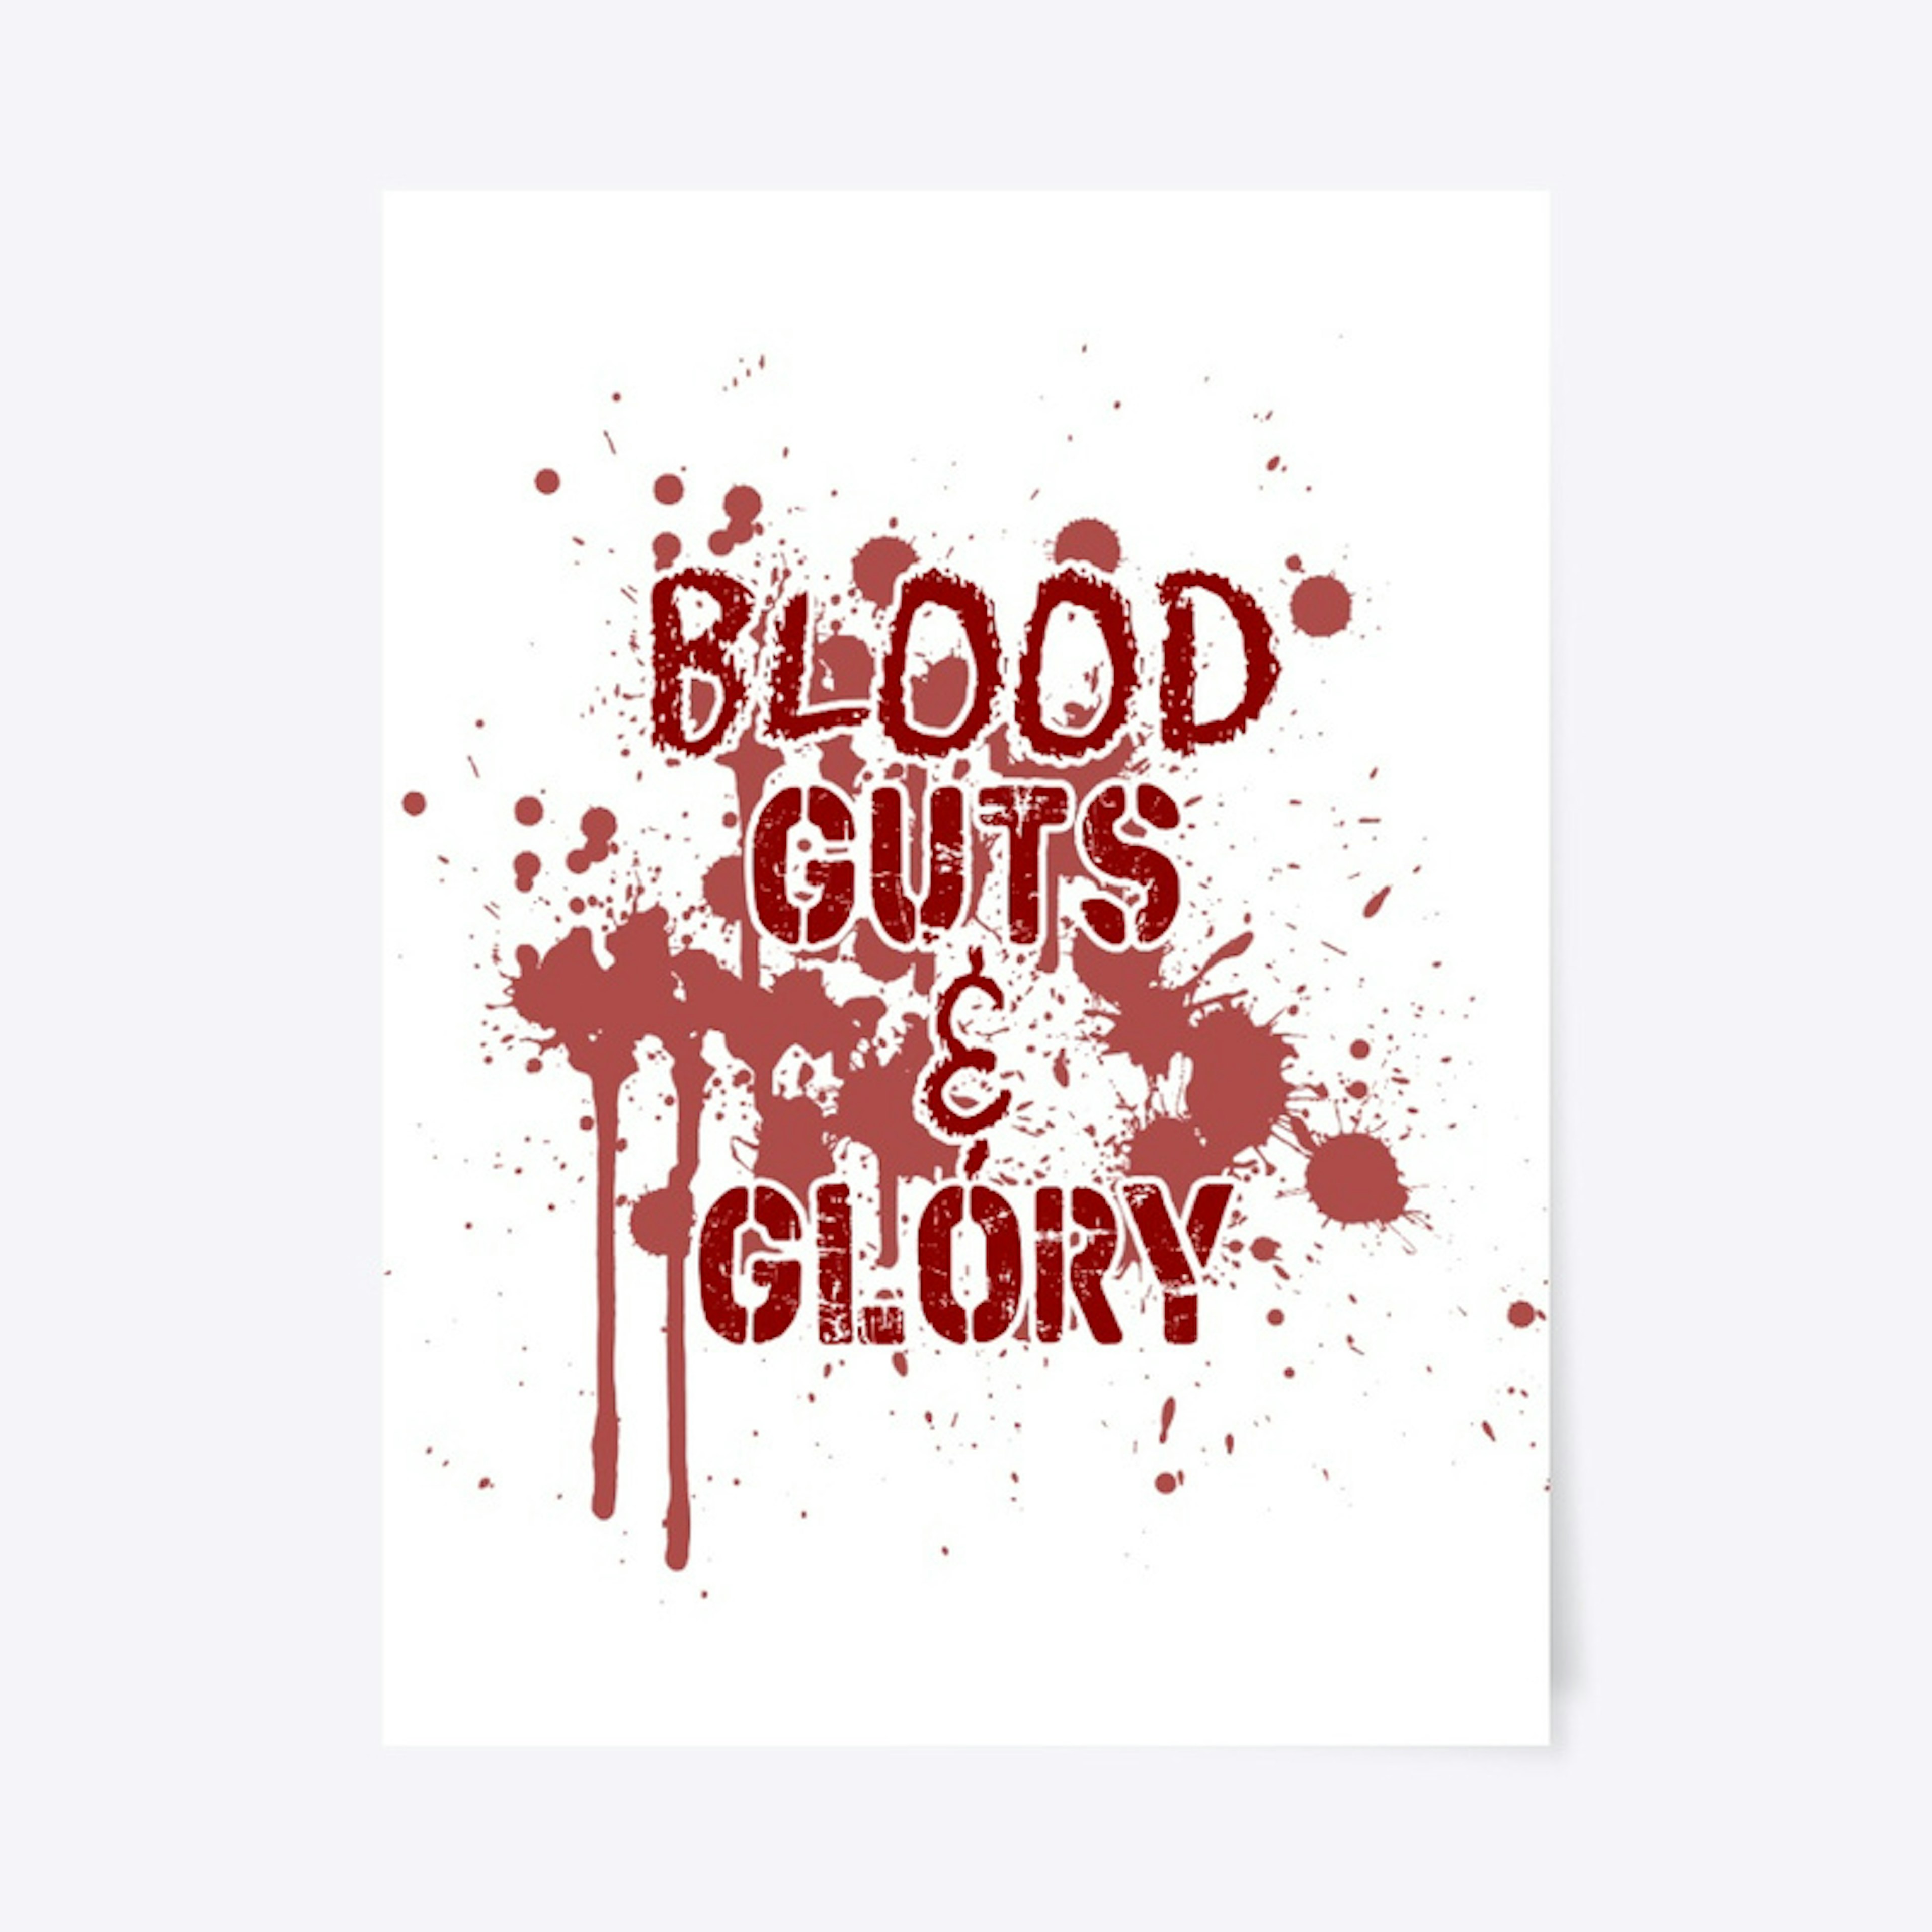 Blood Guts and Glory T-Shirt!